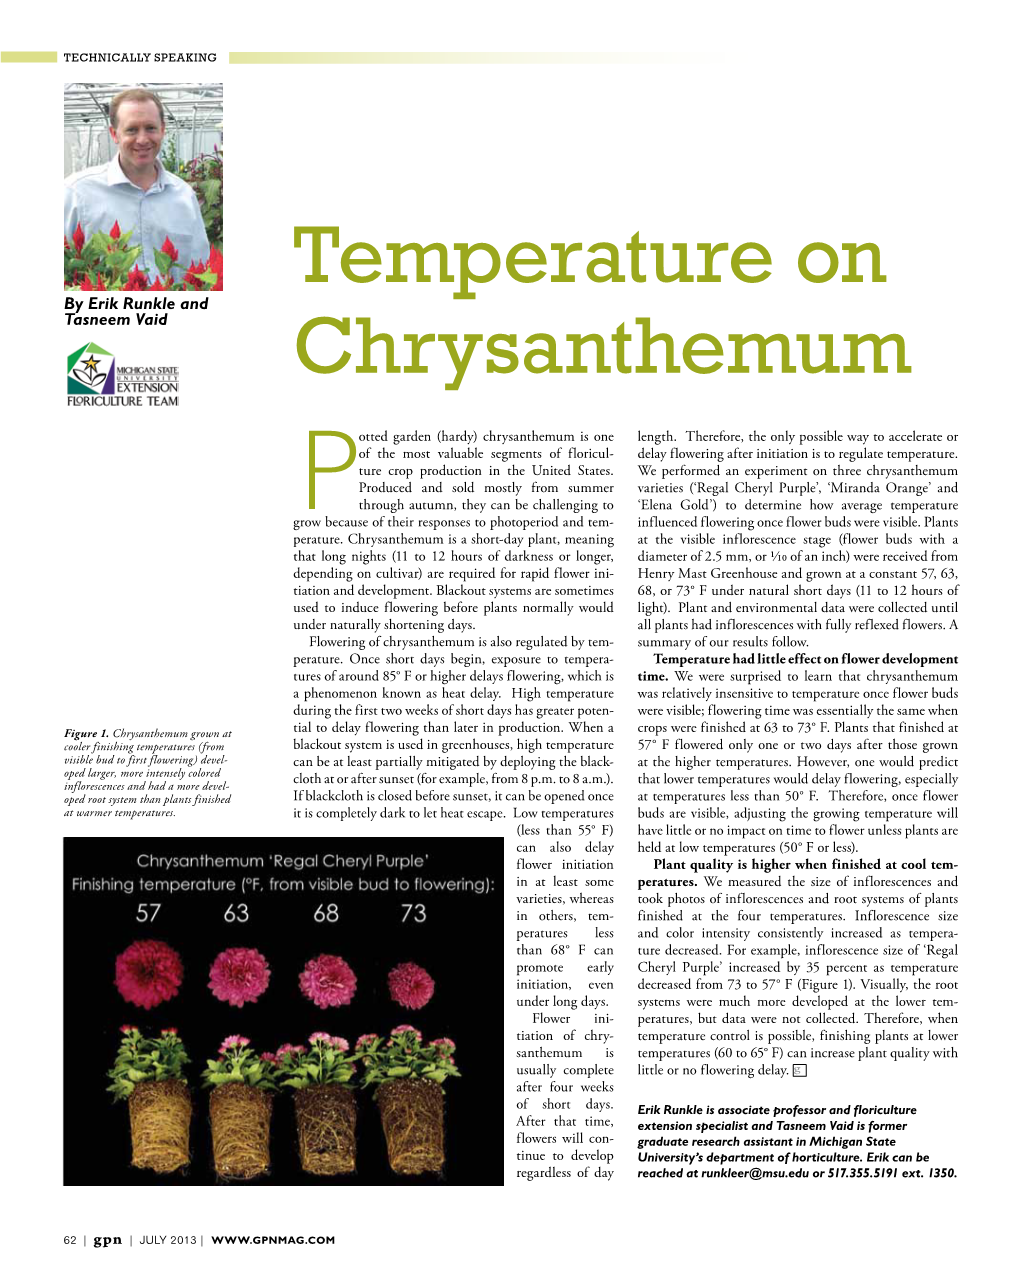 Temperature on Chrysanthemum